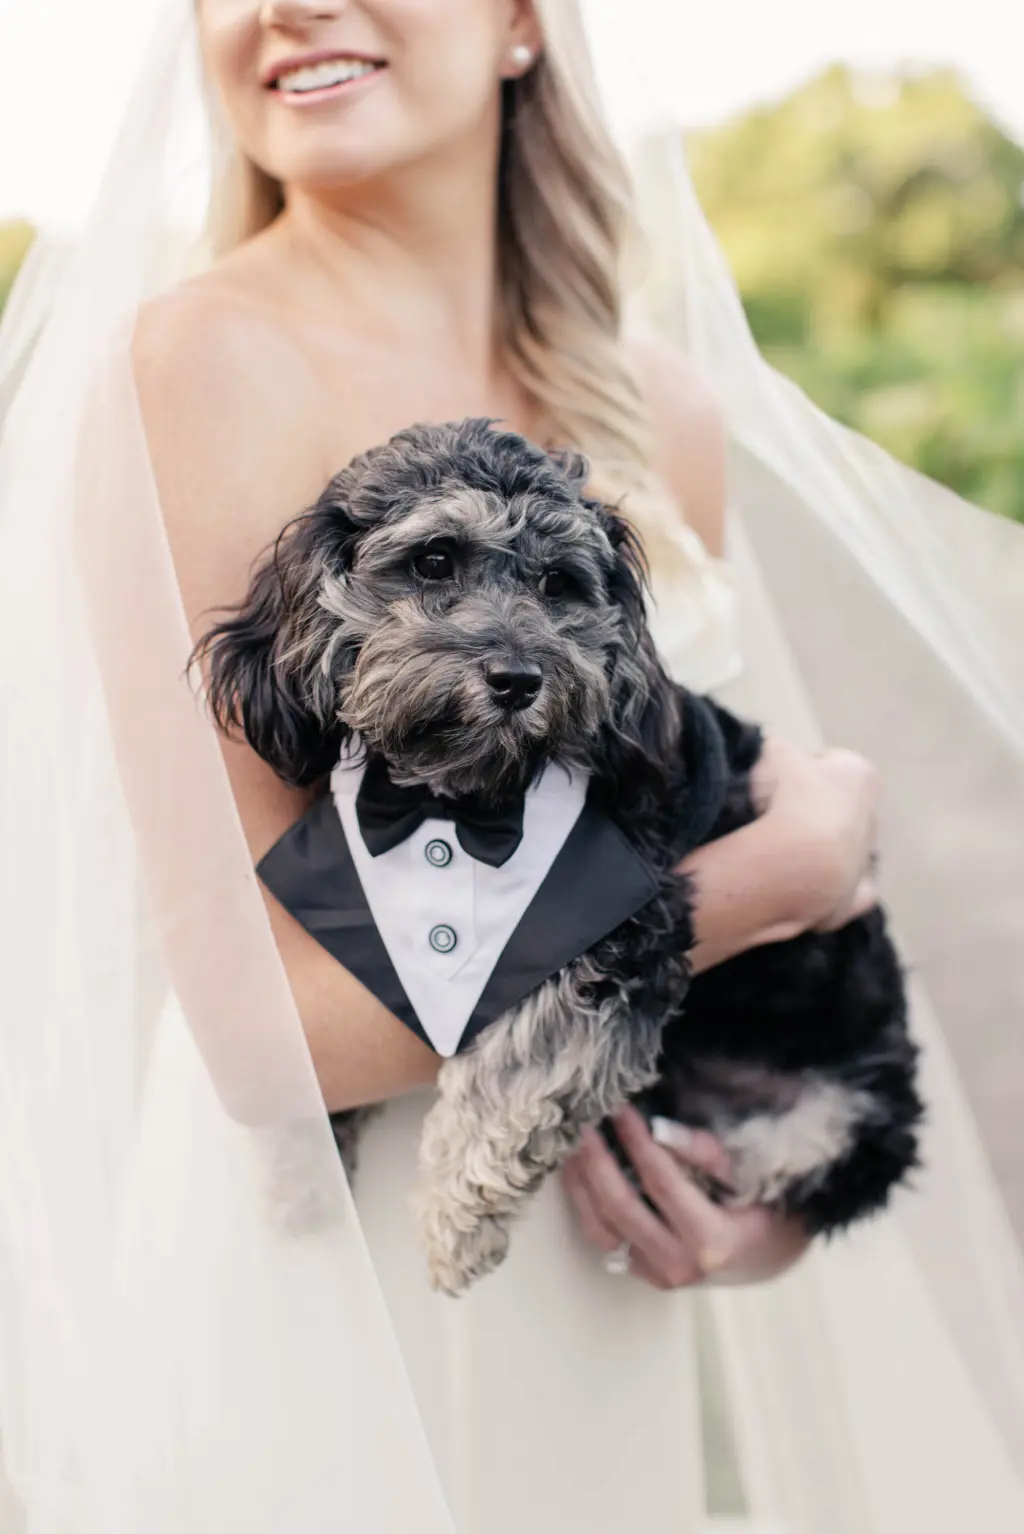 Dog with Wedding Tuxedo Bandana Inspiration | Tampa Bay Pet Planner FairyTail Pet Care